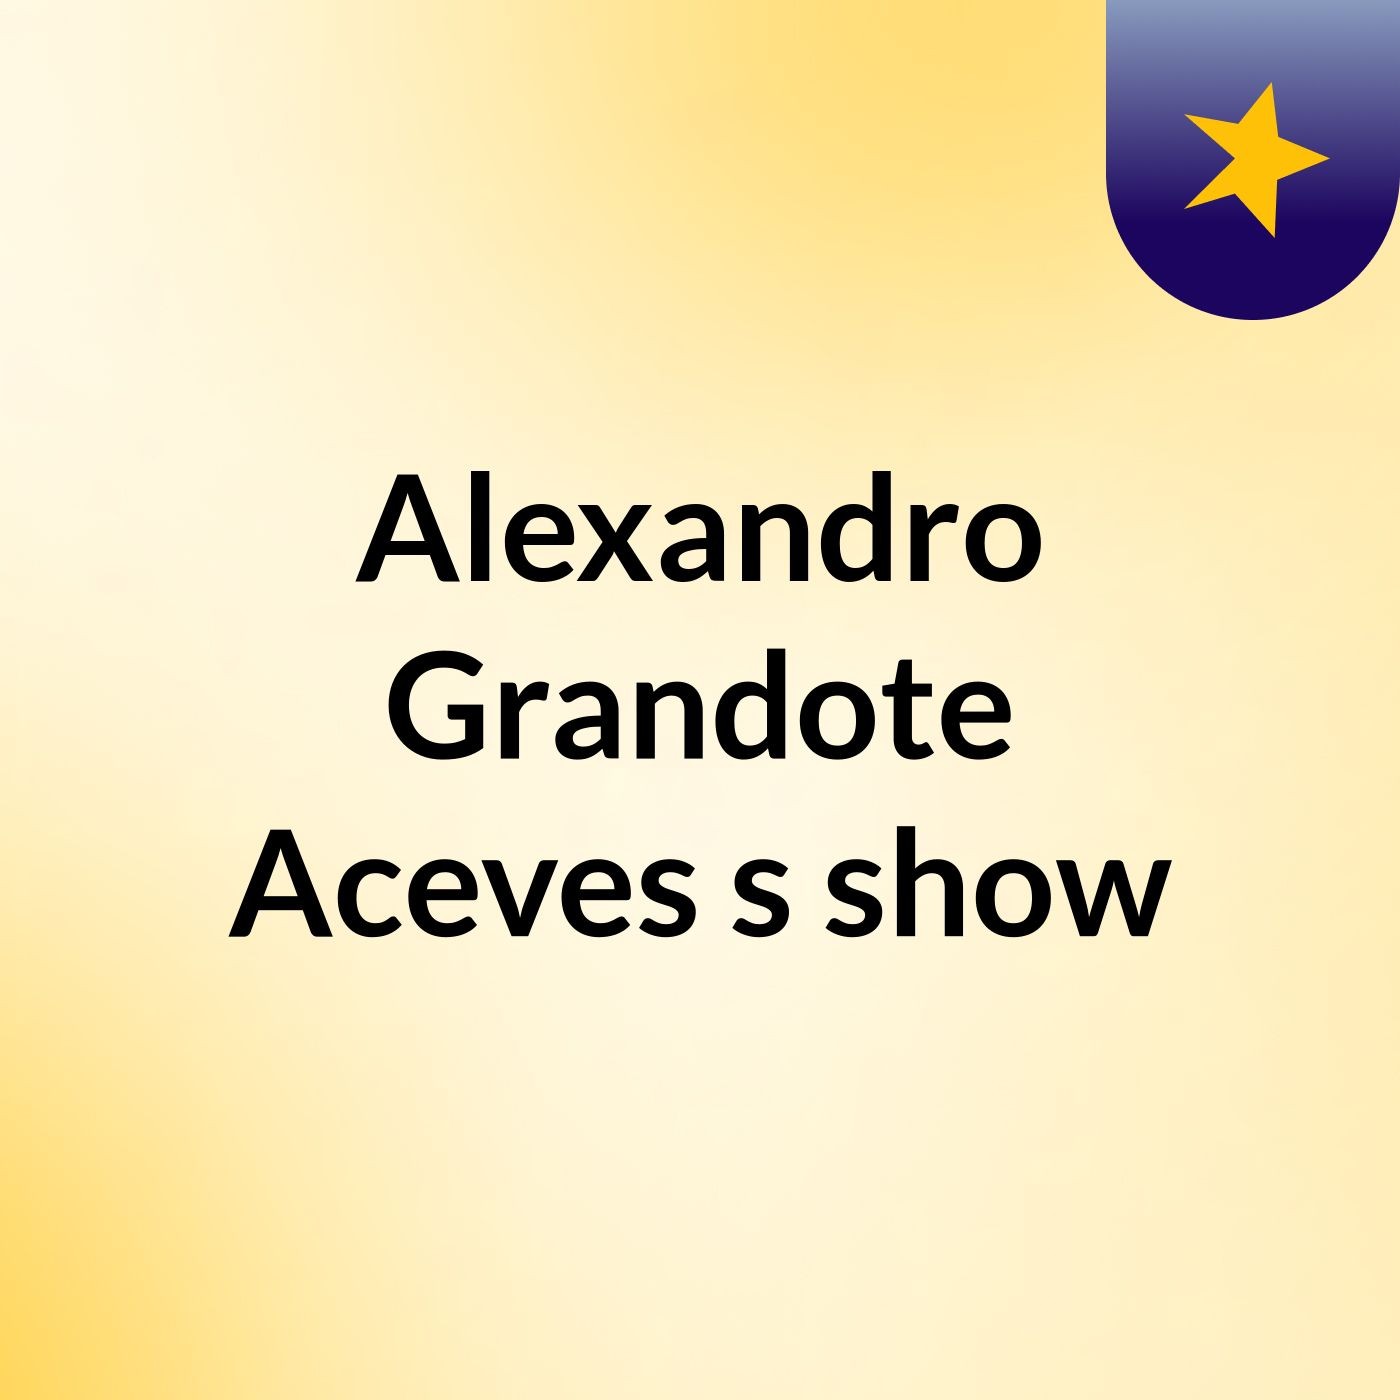 Alexandro Grandote Aceves's show